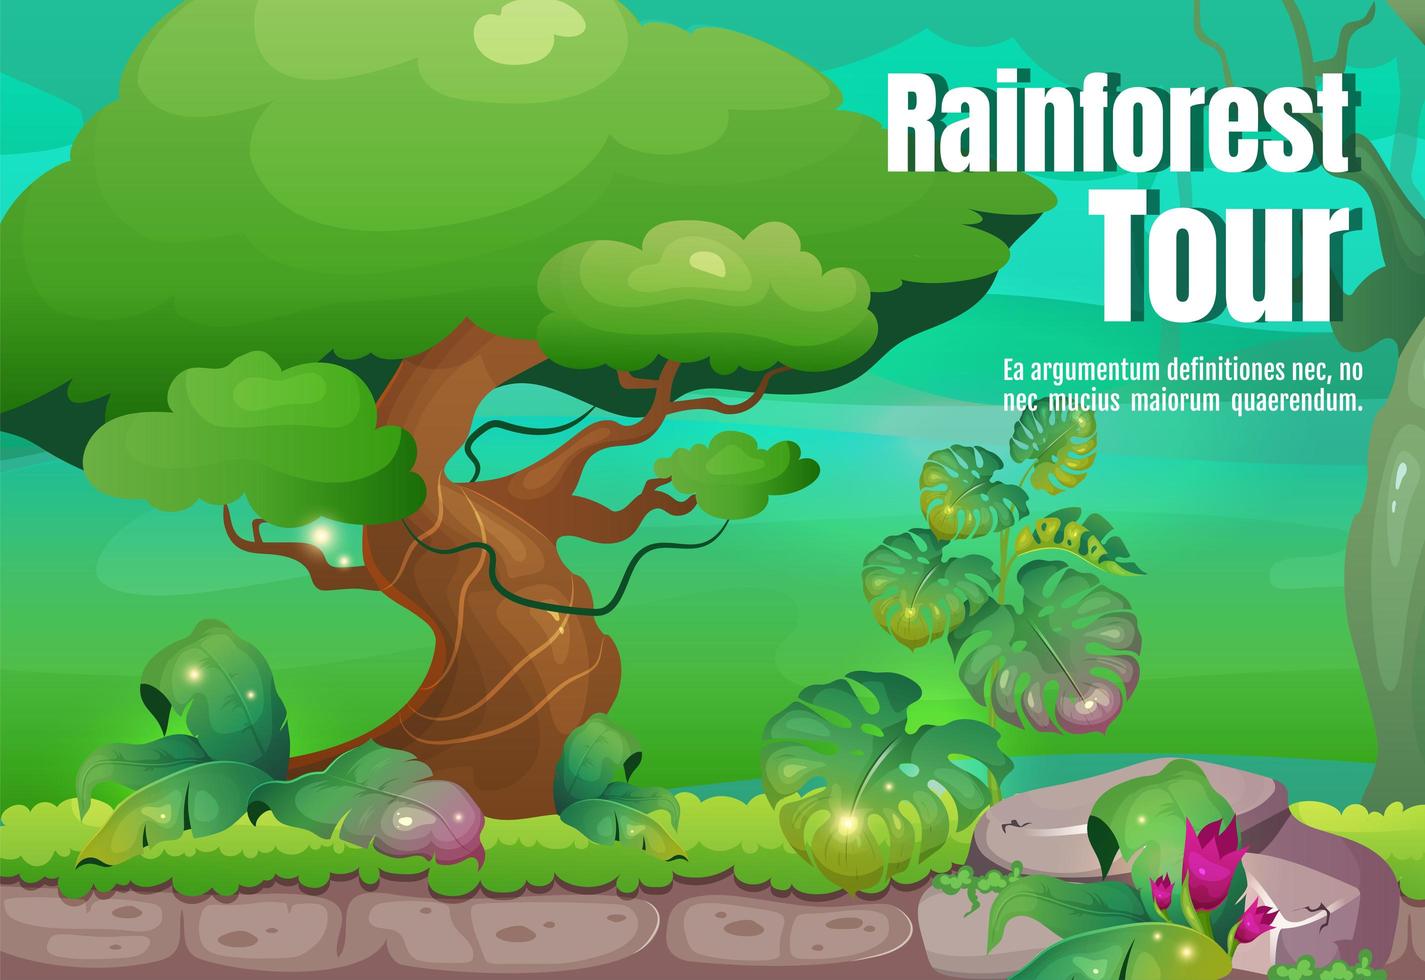 Rainforest tour poster vector